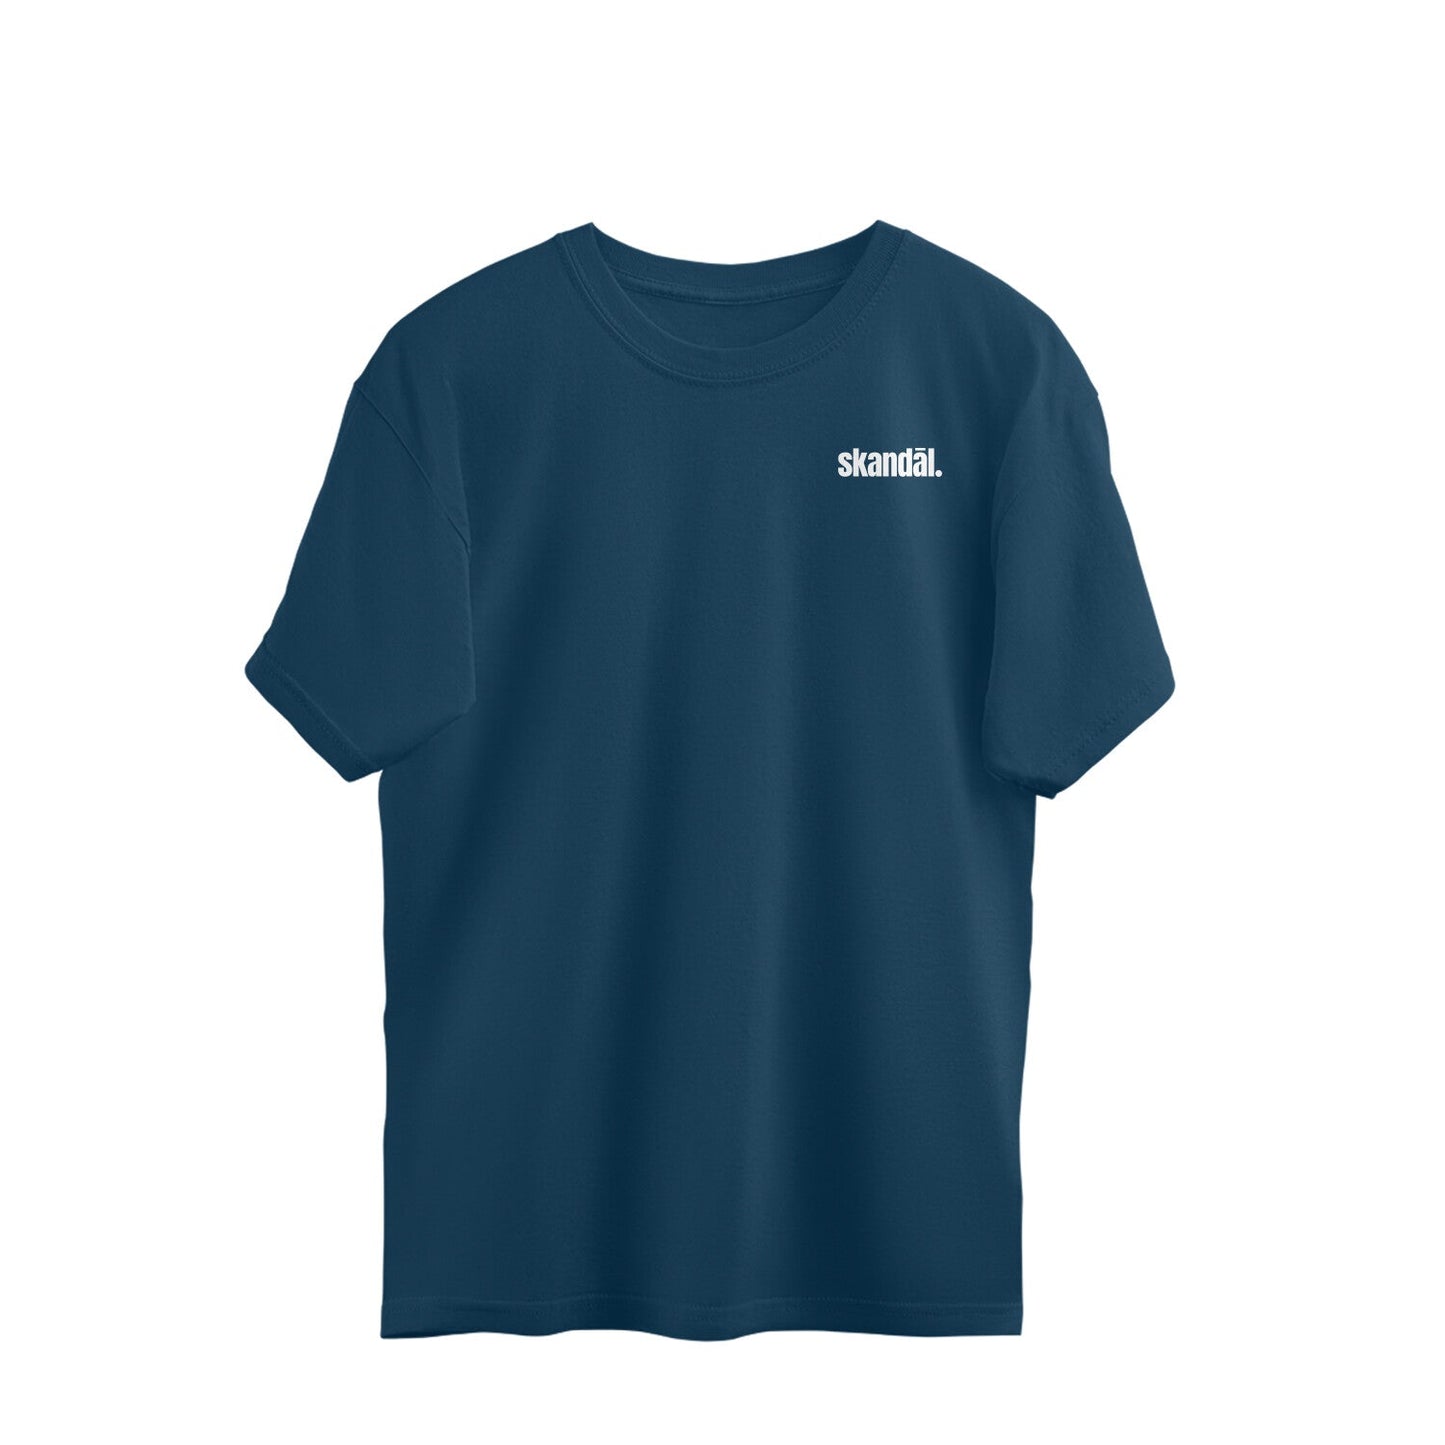 Unisex Human Being Oversized T-Shirt